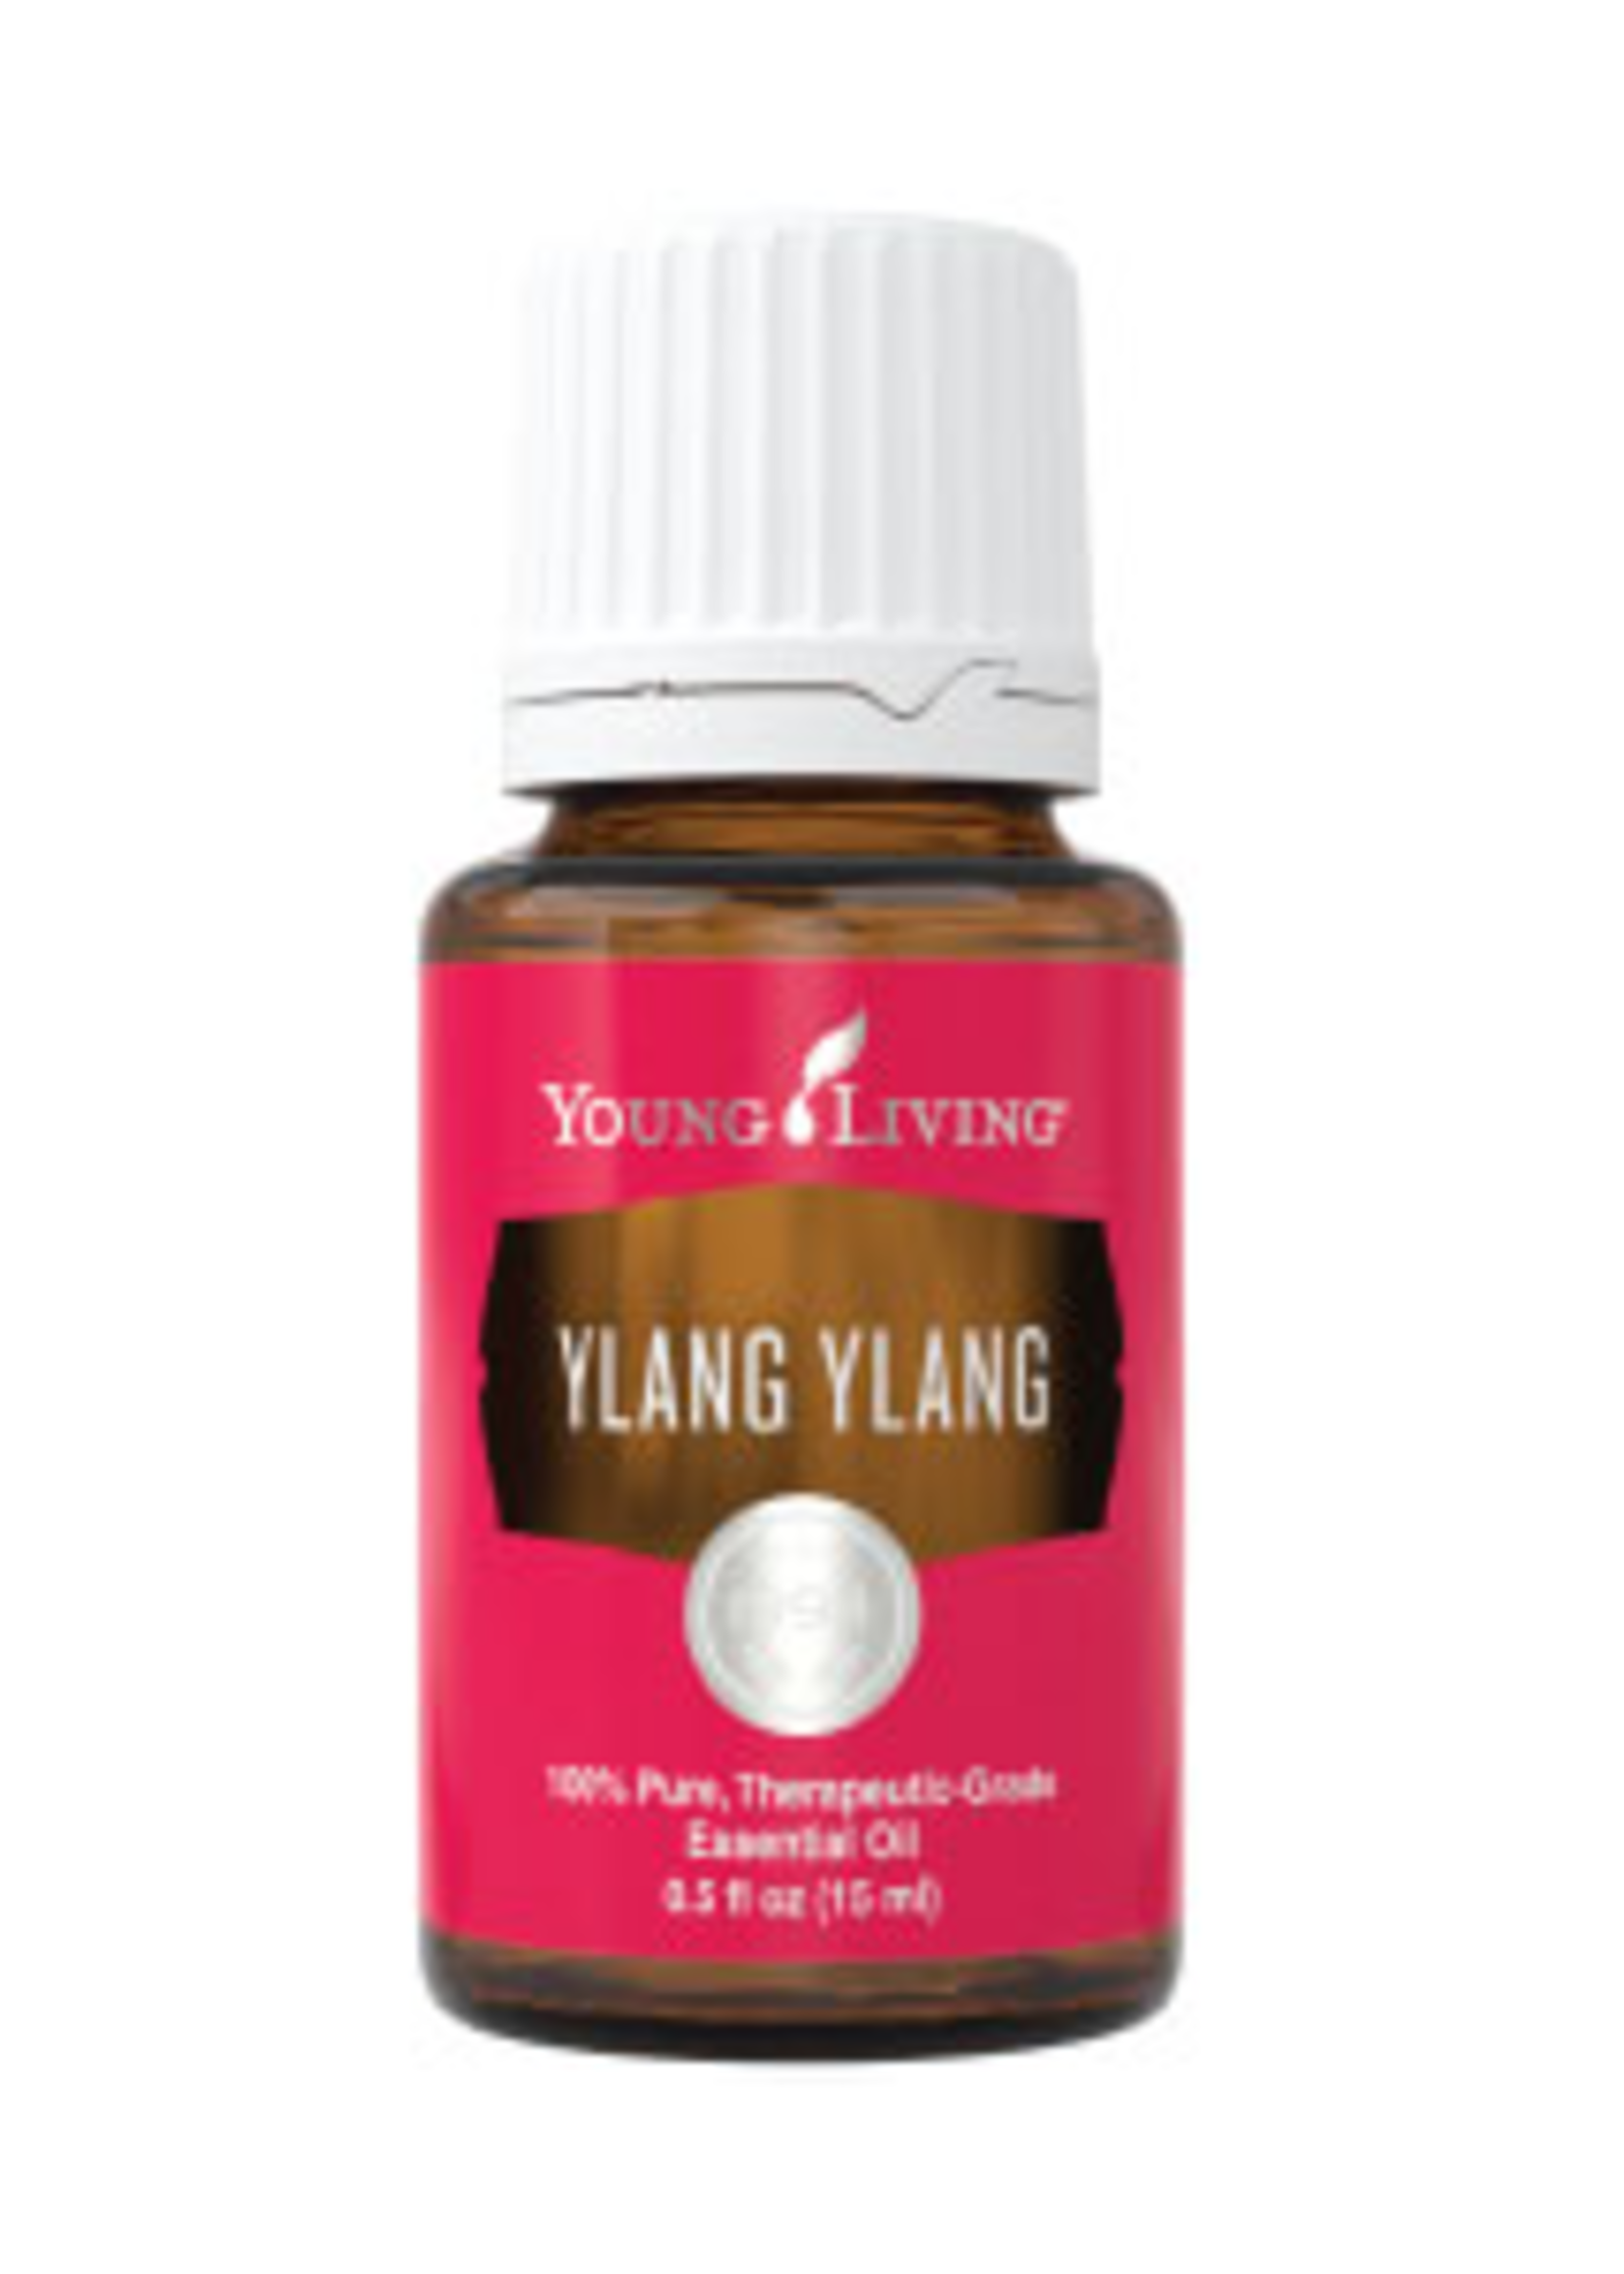 Young Living Ylang Ylang YL 15 ml